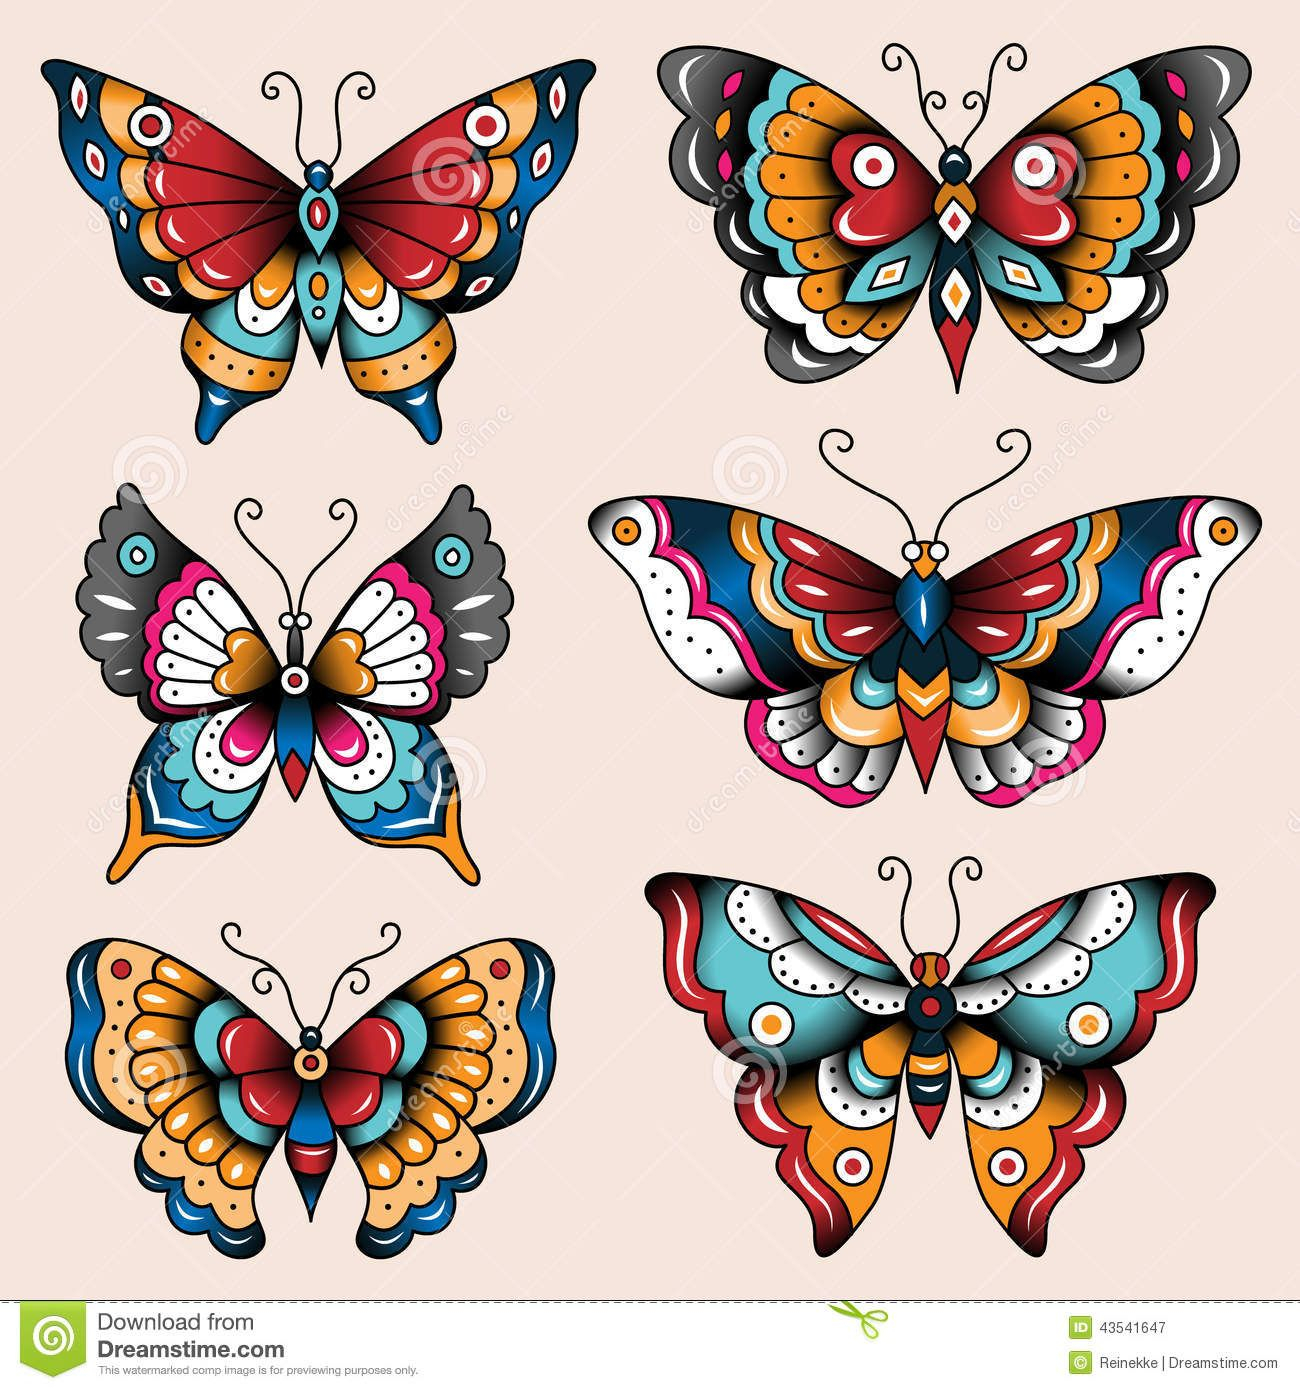 Traditional Butterfly Tattoo Cerca Con Google Tattoos regarding dimensions 1300 X 1390